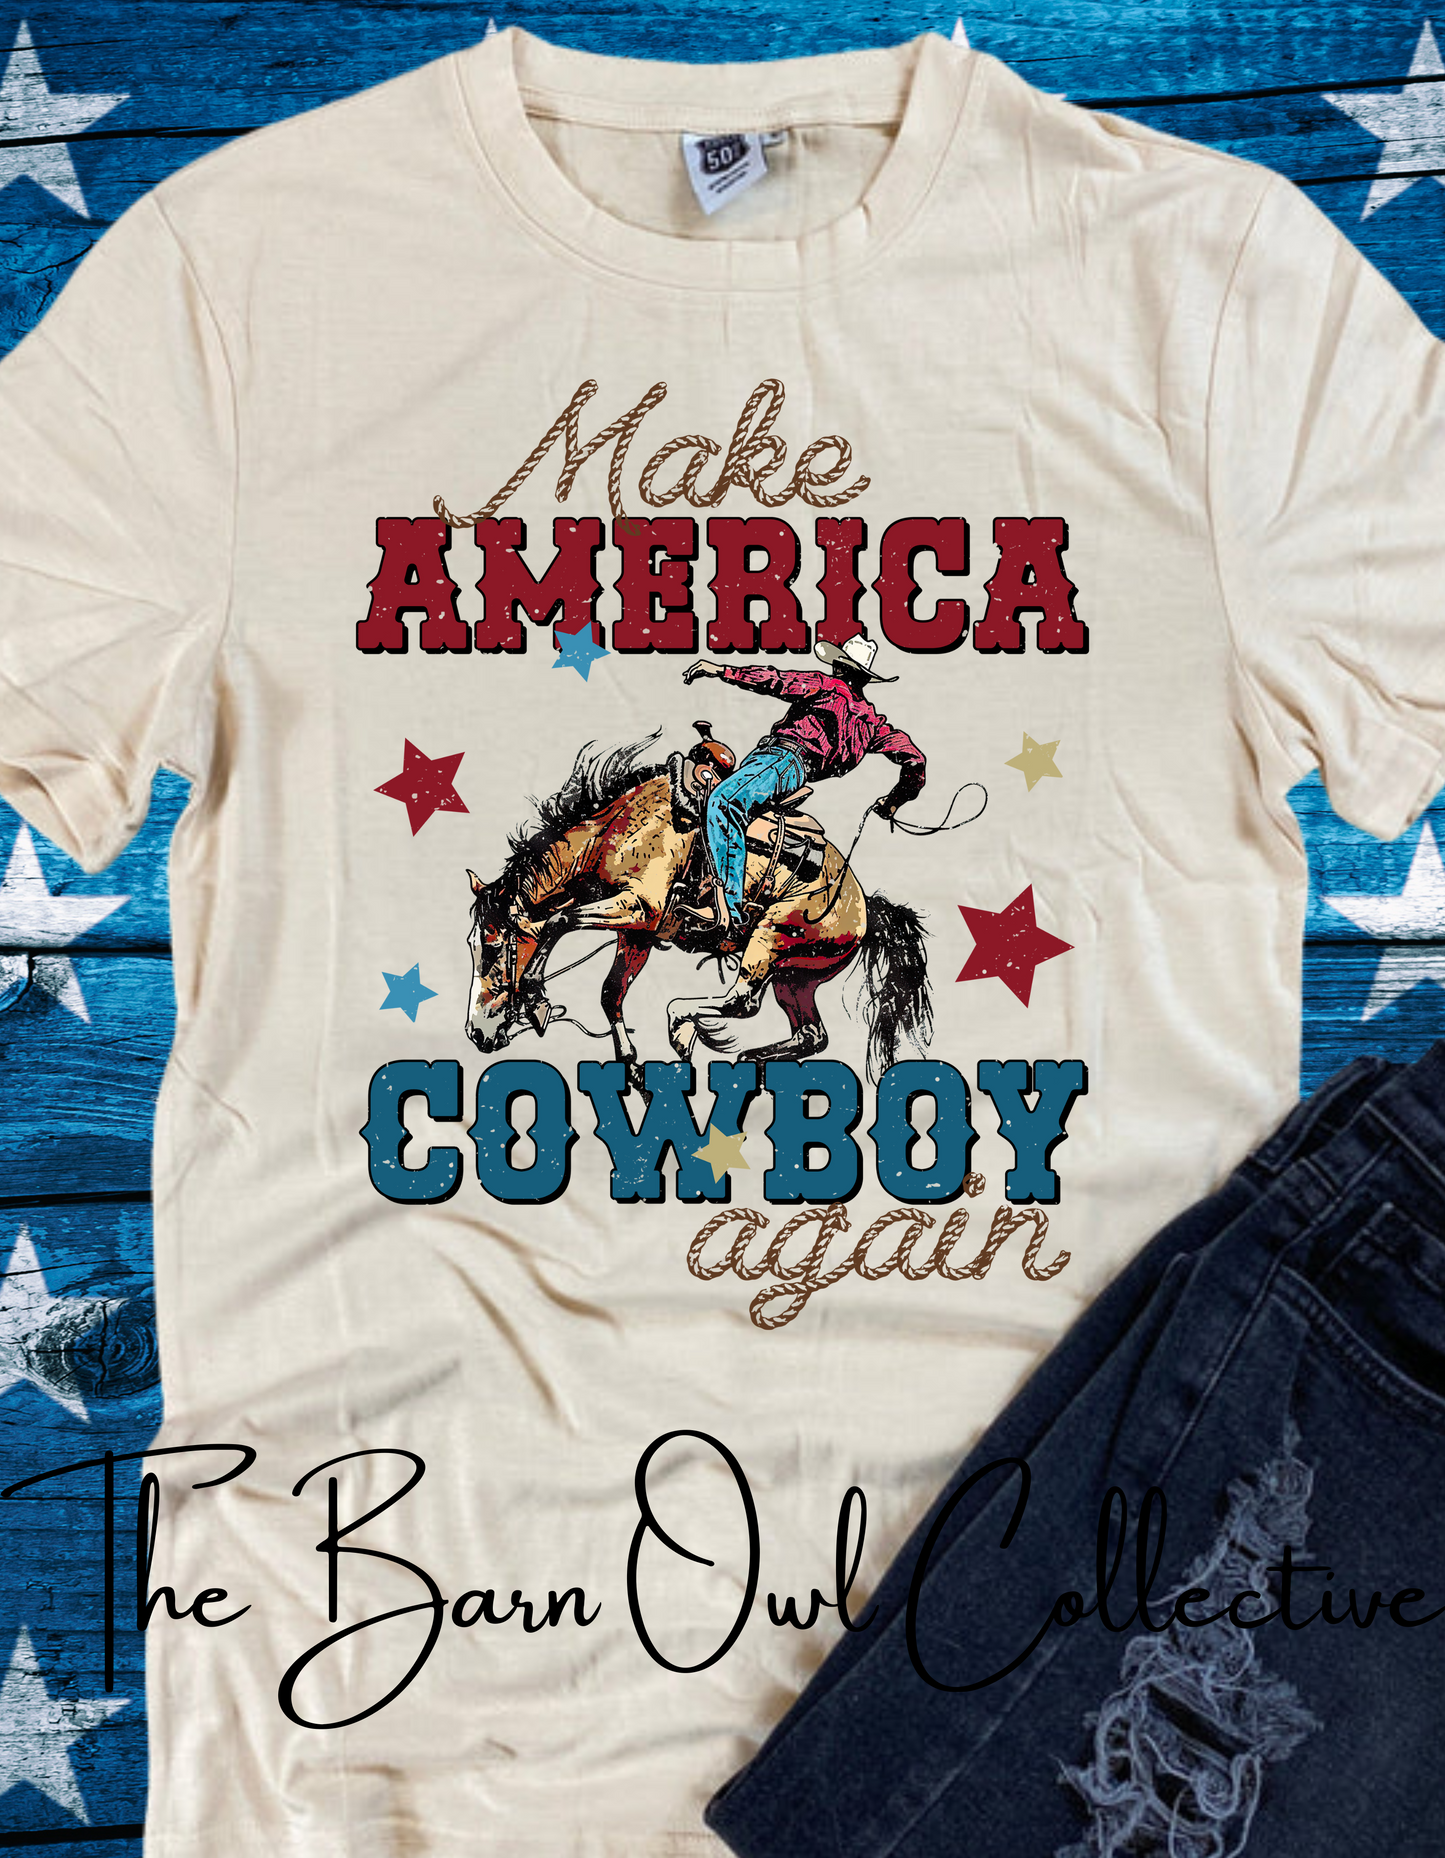 Make America Cowboy Again Unisex Crewneck T-Shirt